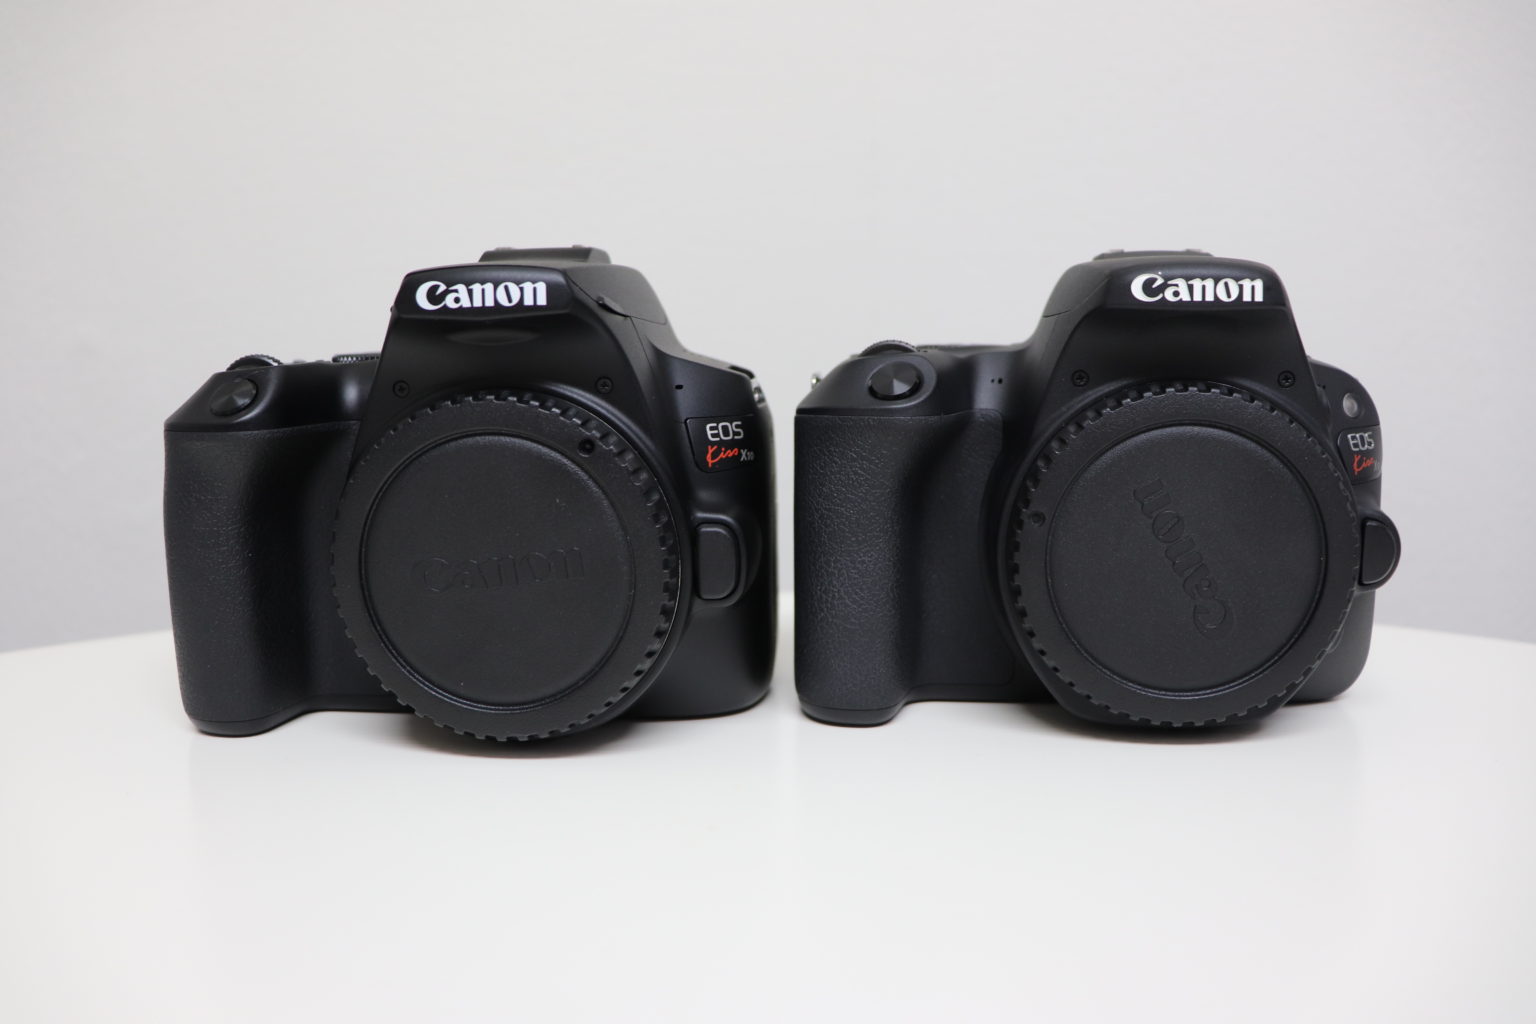 Canon - 【数回使用✨箱なし】Canon デジタル一眼レフカメラ EOS Kiss